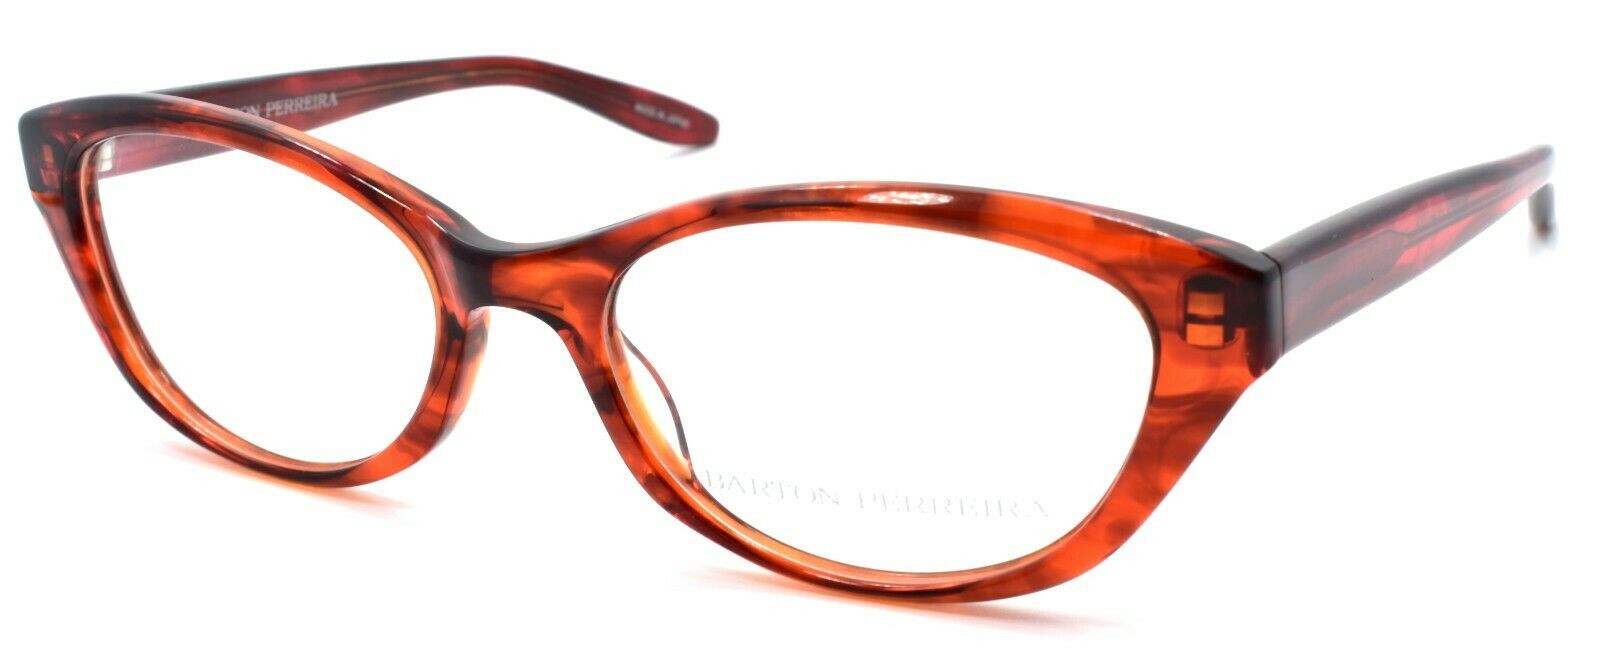 1-Barton Perreira Sofia PIN Women's Eyeglasses Frames Cat Eye 50-18-135 Pinot Red-672263039570-IKSpecs